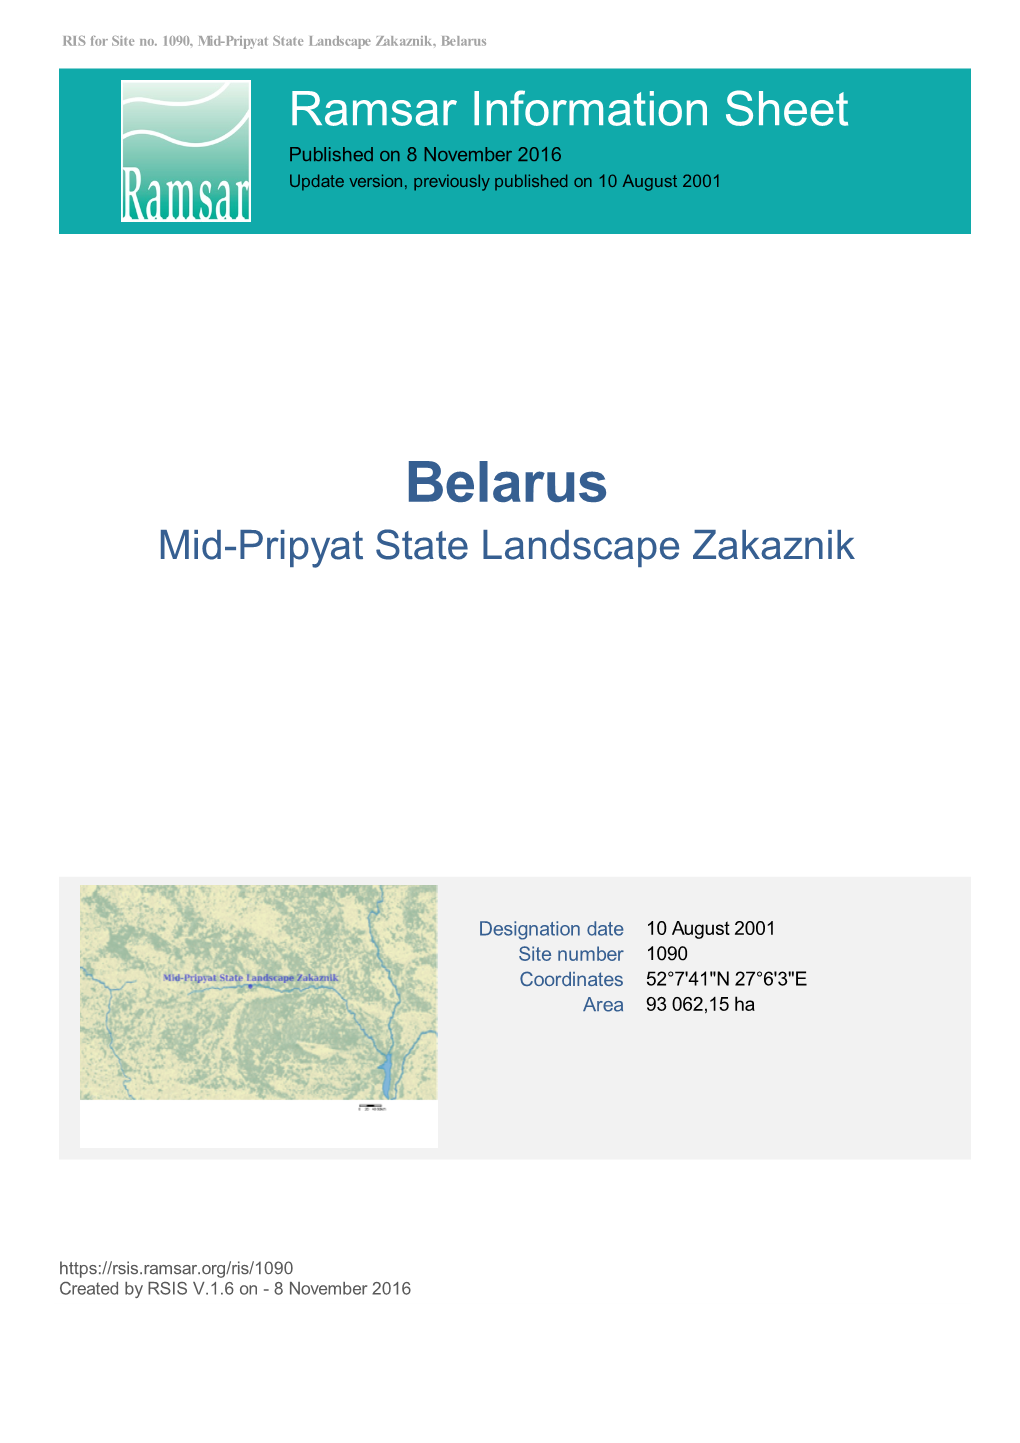 Belarus Ramsar Information Sheet Published on 8 November 2016 Update Version, Previously Published on 10 August 2001